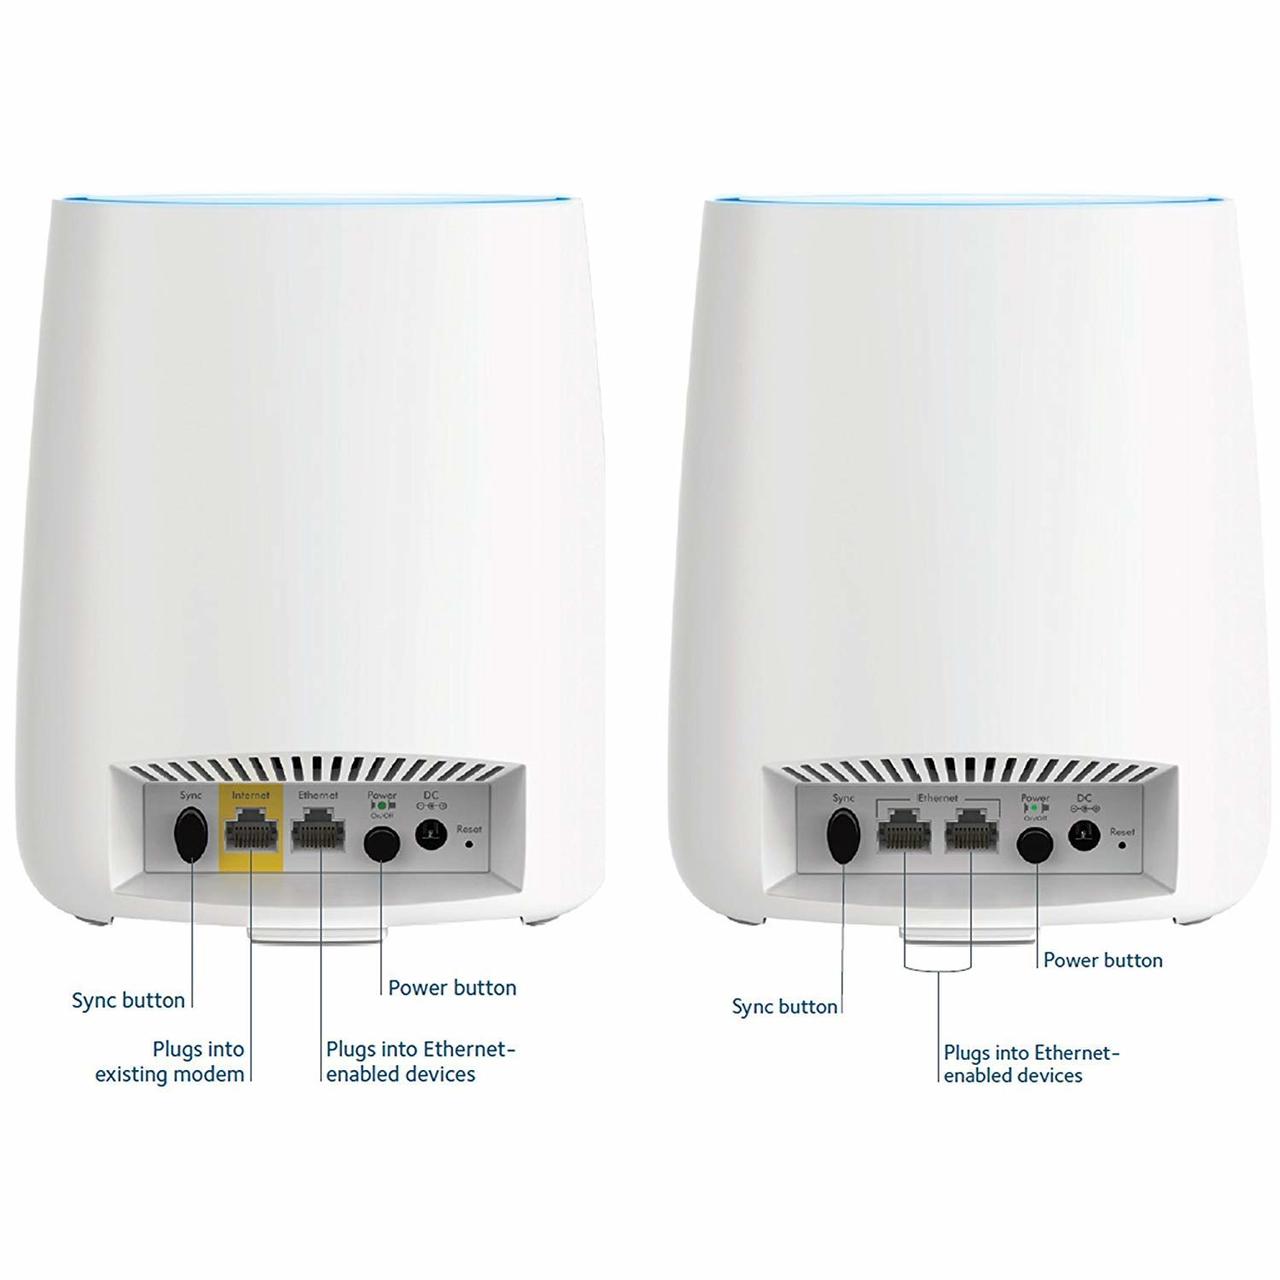 Netgear RBK53-100NAS Orbi AC3000 Whole Home Tri-band WiFi System